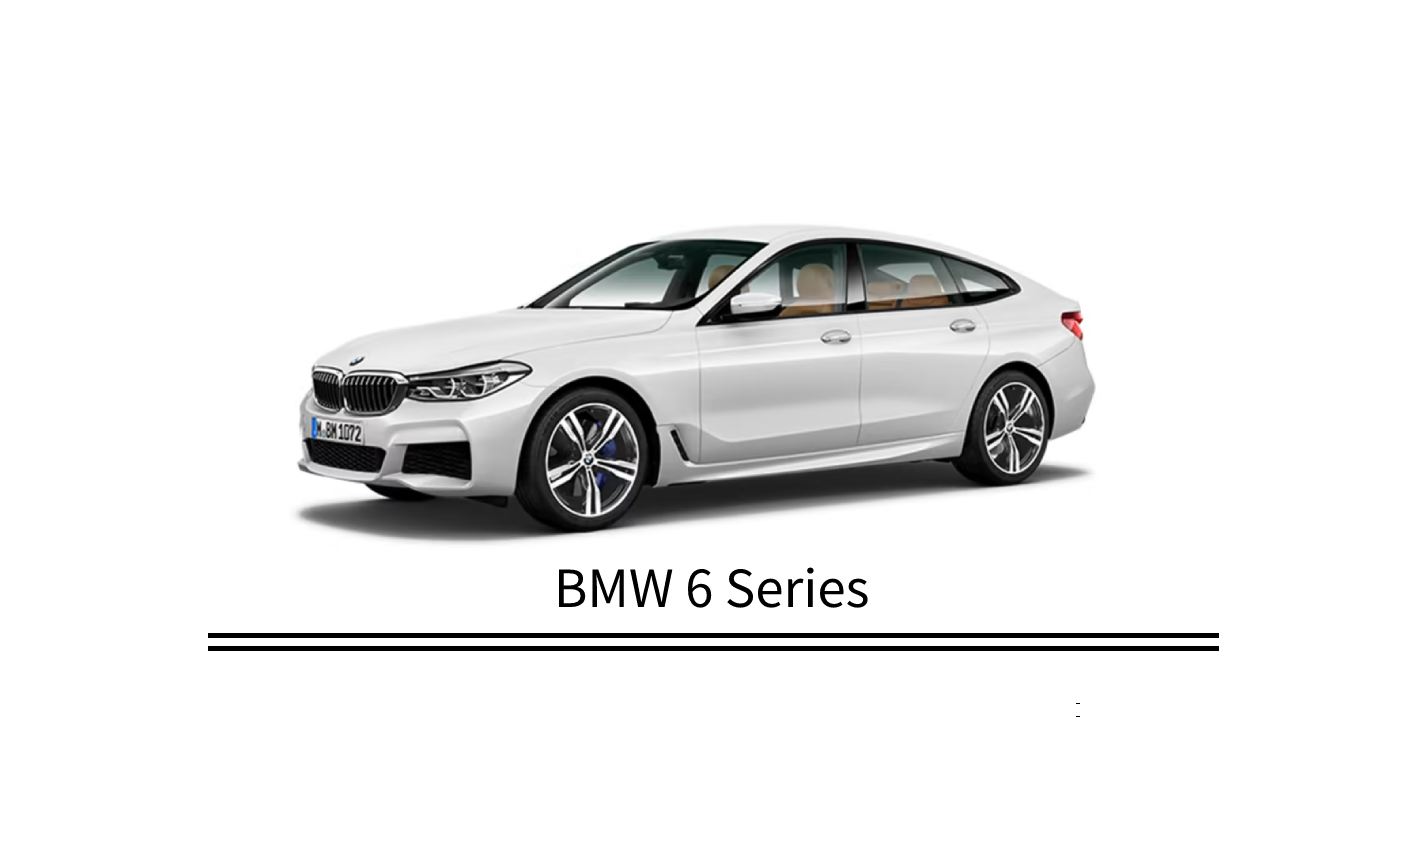 BMW 6 Series Wrap`s Information